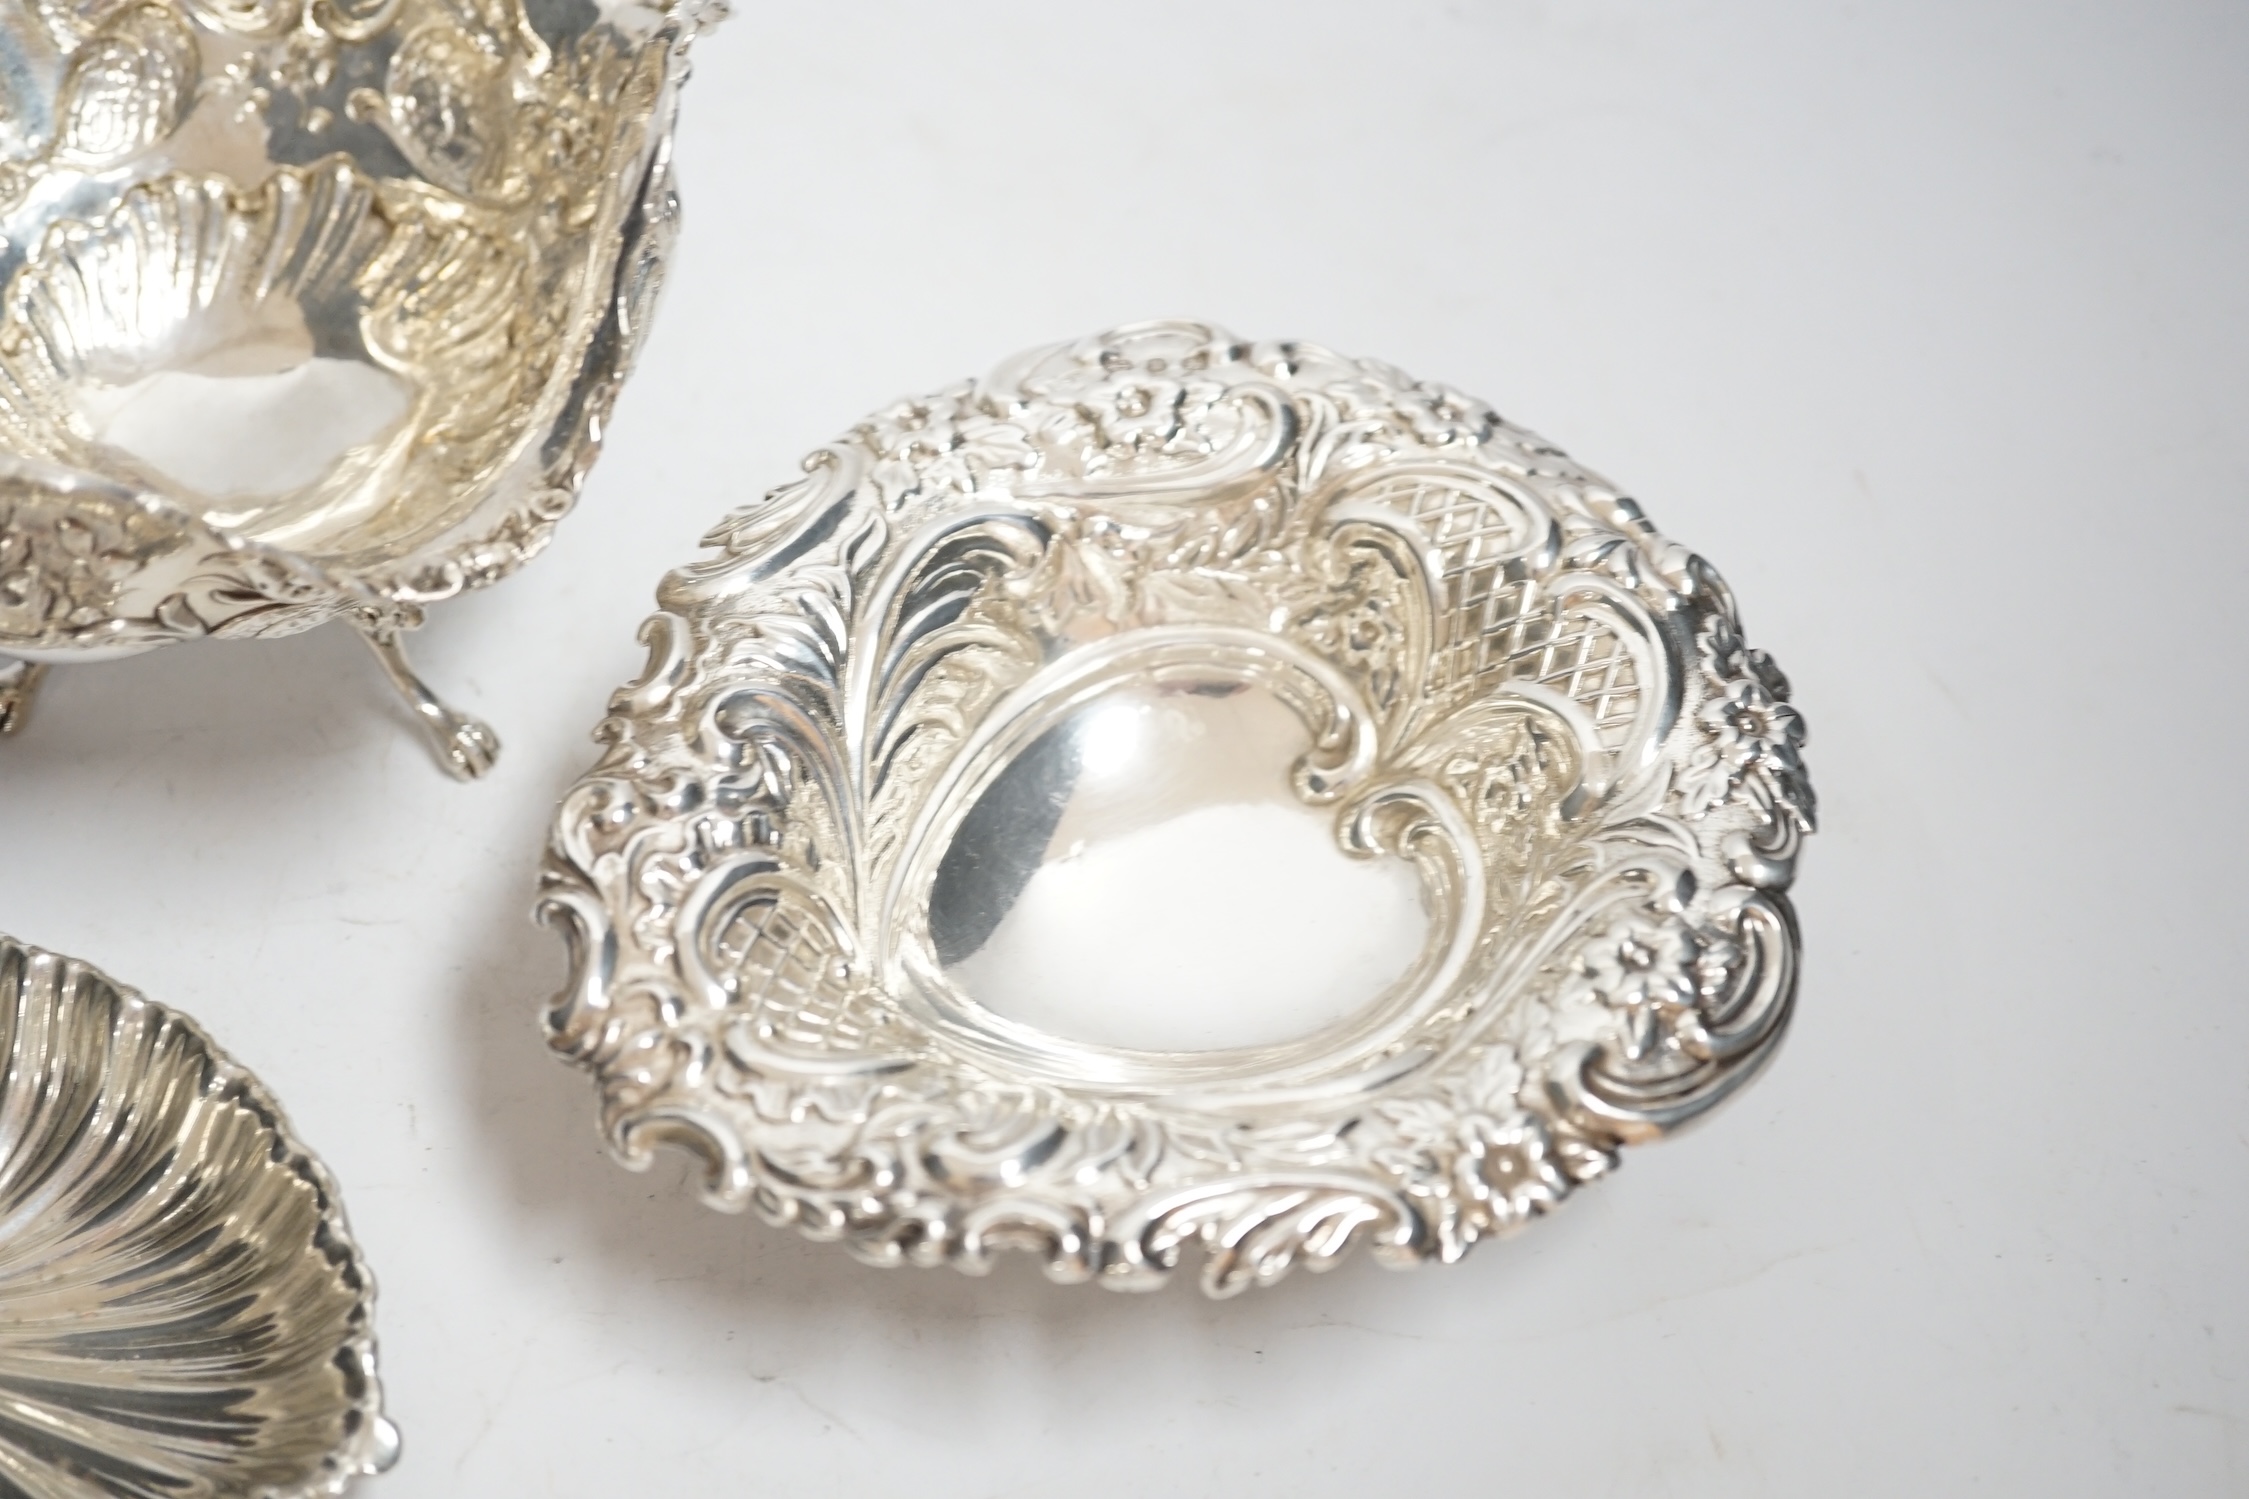 A late Victorian repousse silver heart shaped dish, I.S. Greenburg & Co, Birmingham, 1894, 14.3cm, a small silver dish and Hanau white metal bowl, 12.1oz.